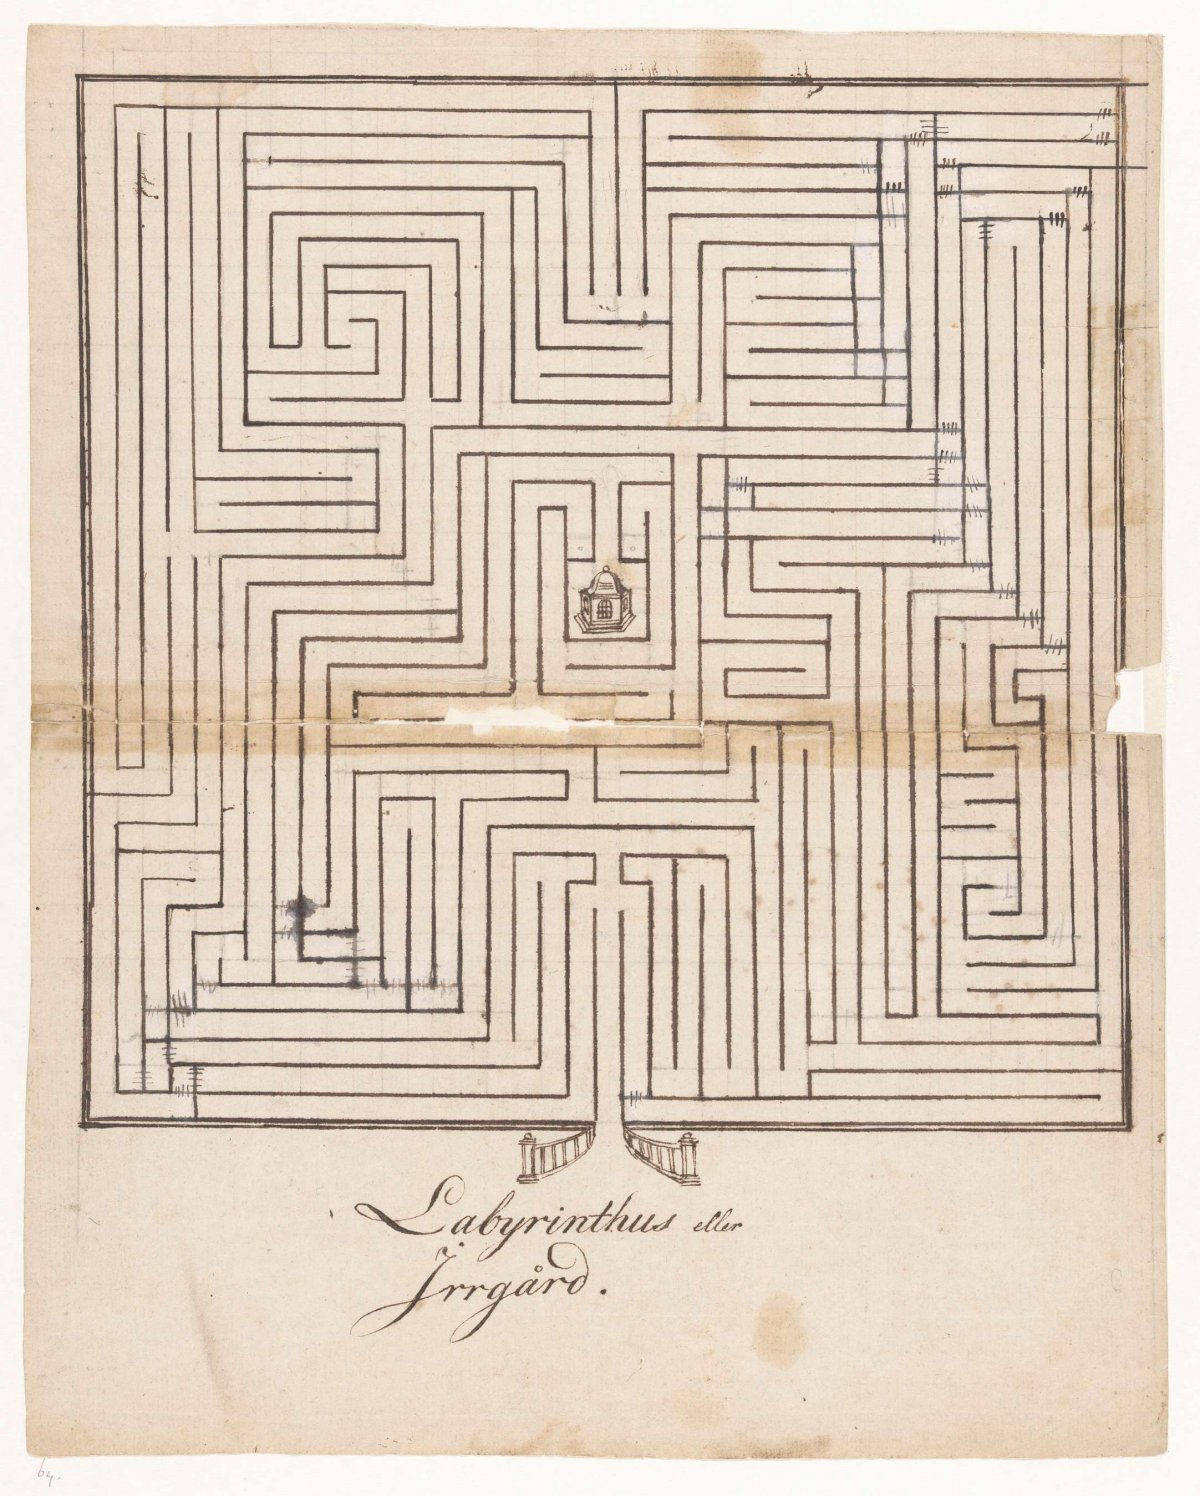 Labyrint, Jan Brandes, 1788 - 1808